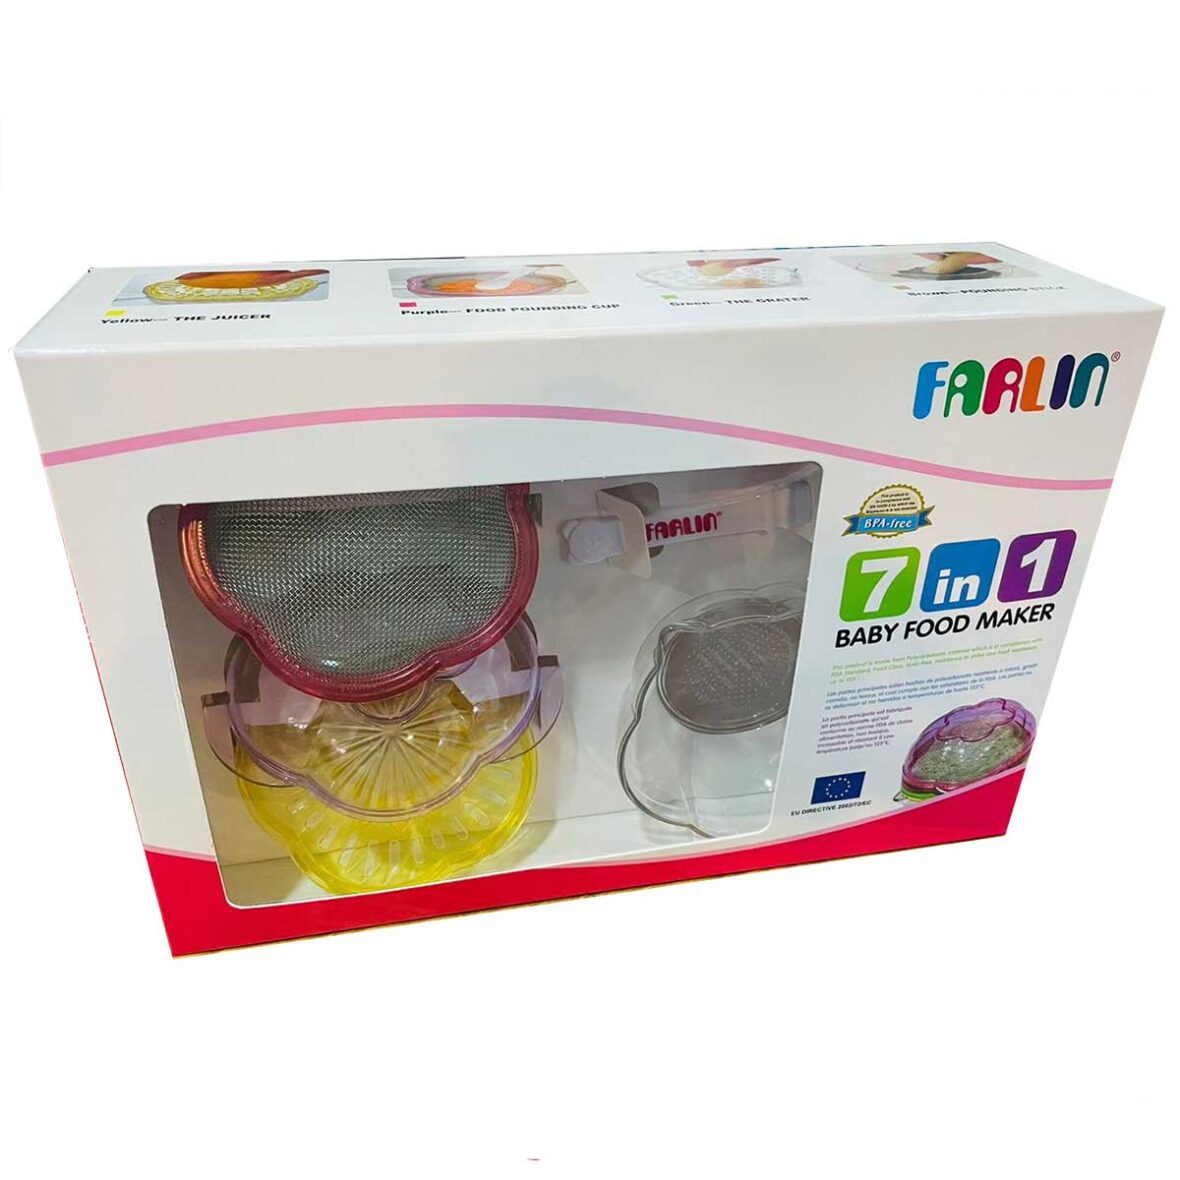 Farlin 7 in 1 Baby Food Maker